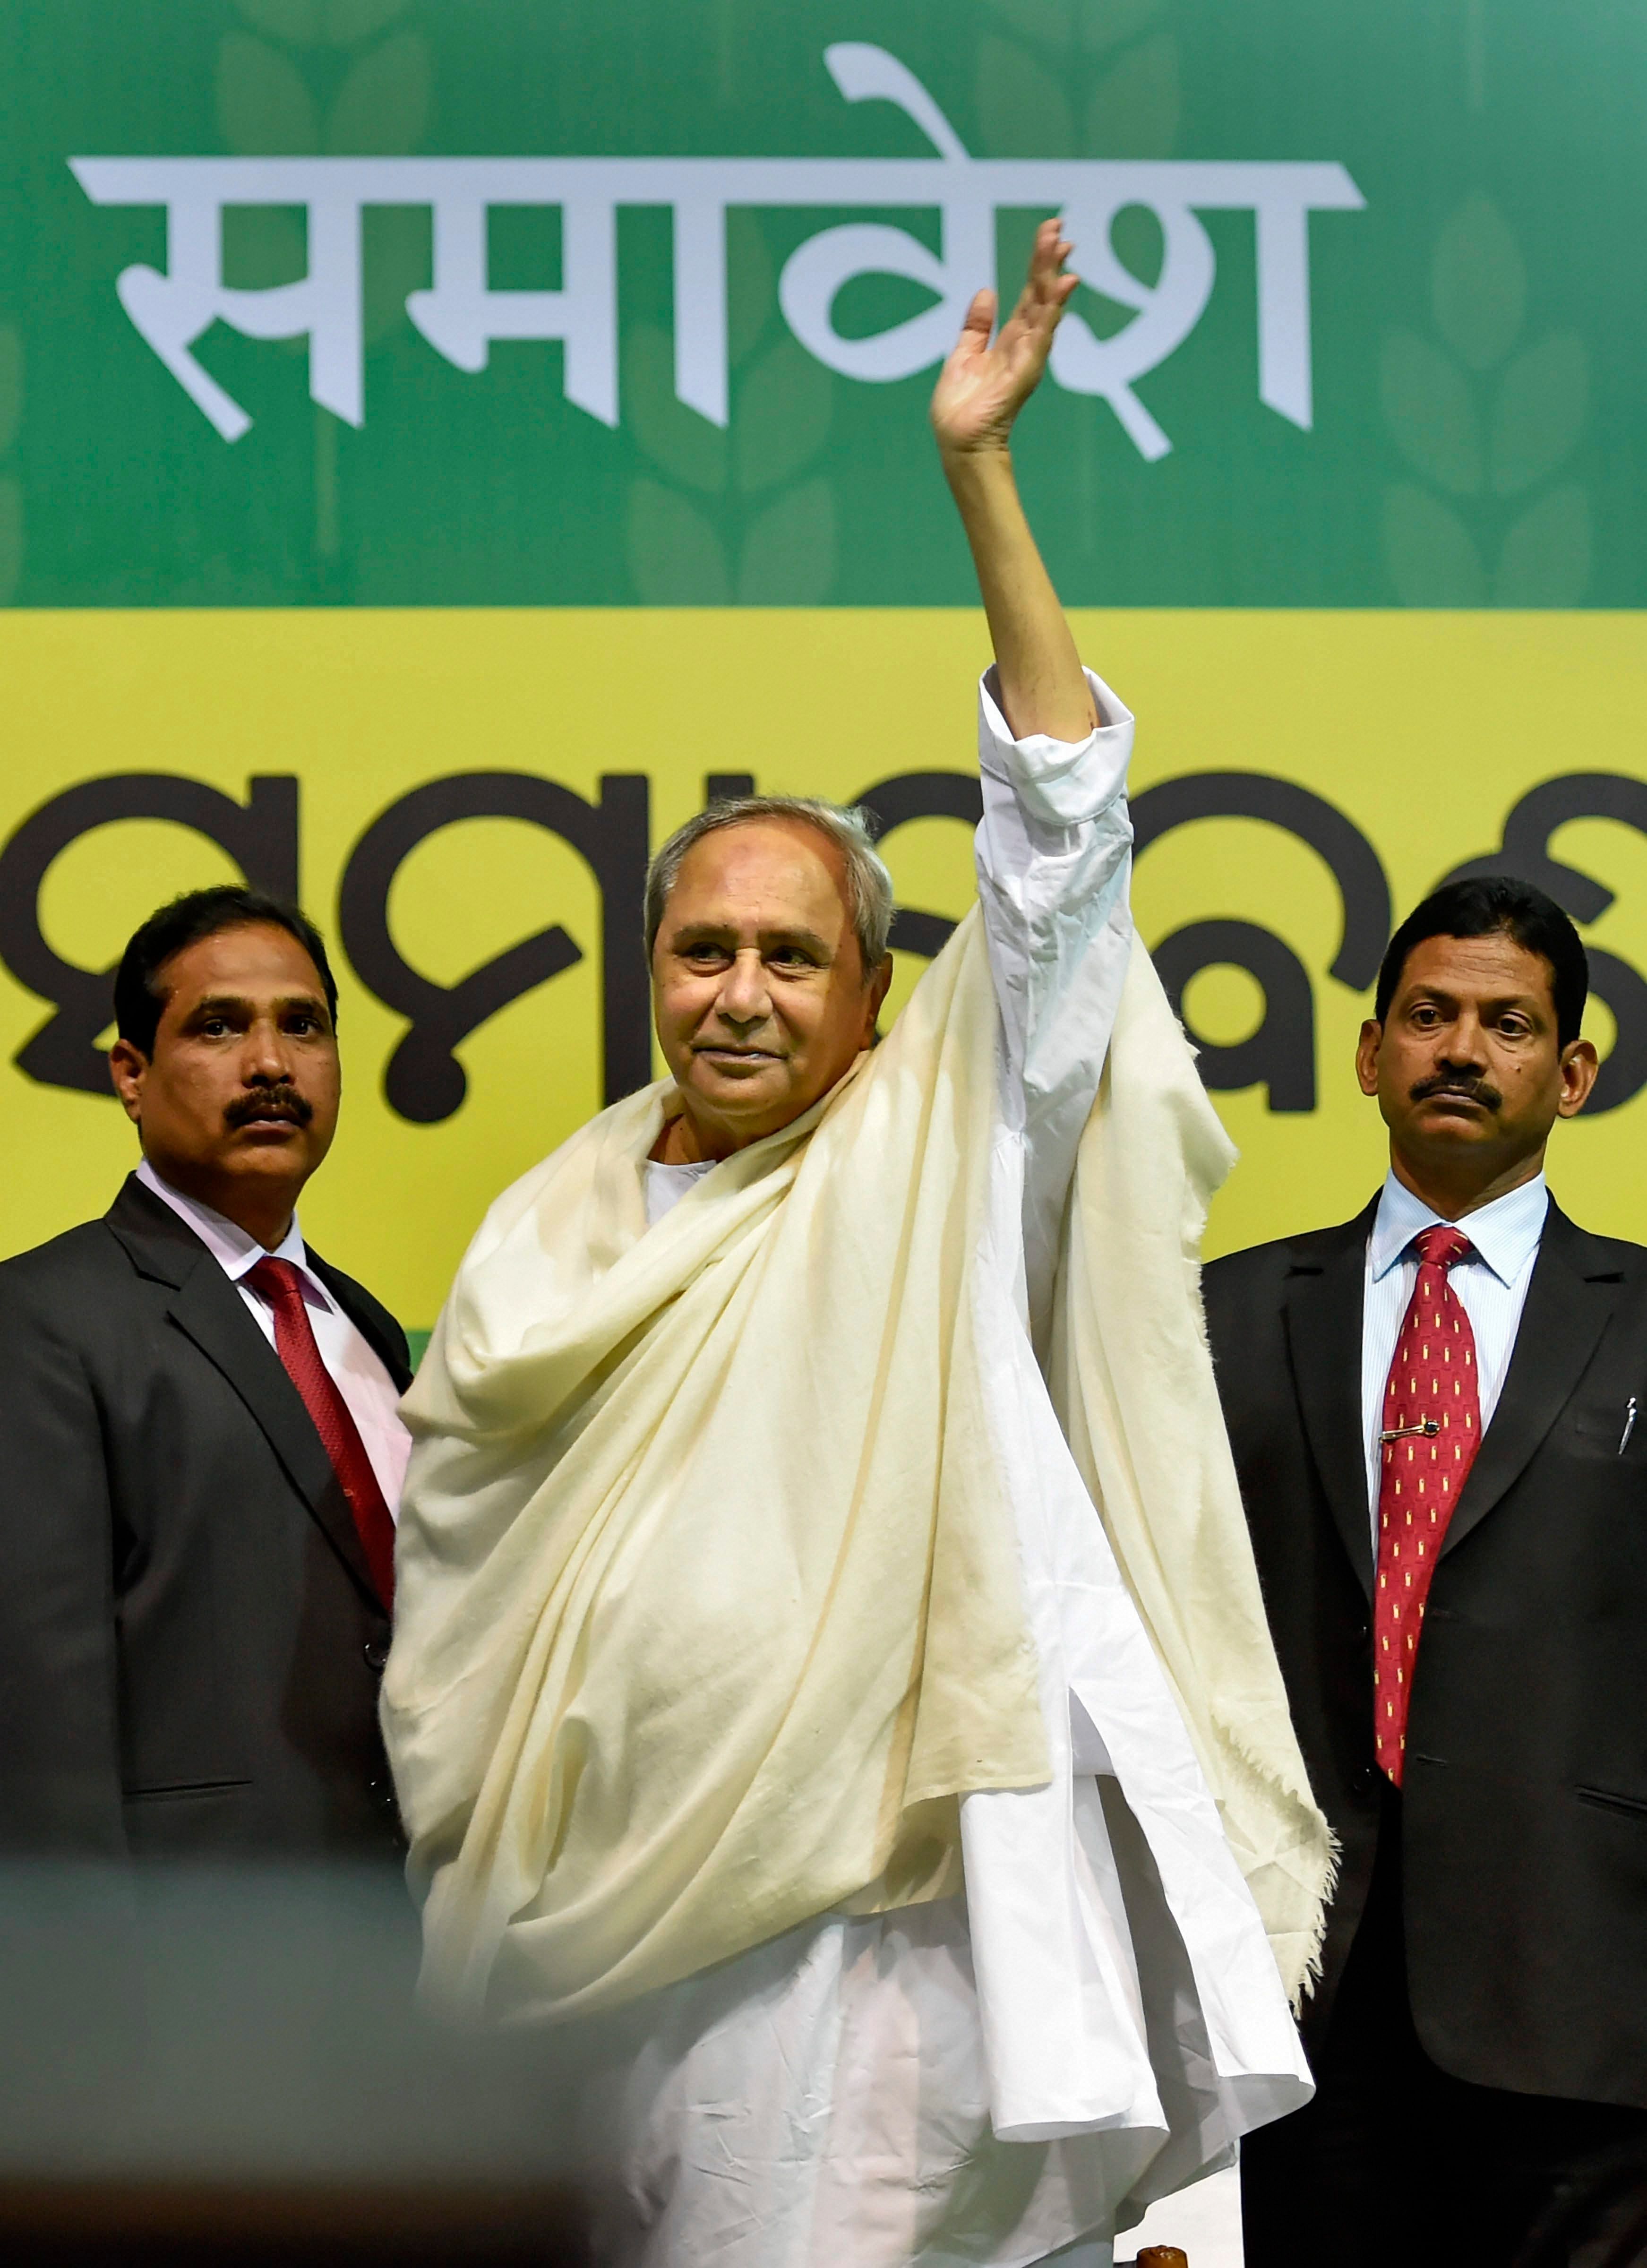 Odisha Chief Minister Naveen Patnaik. (PTI Photo)